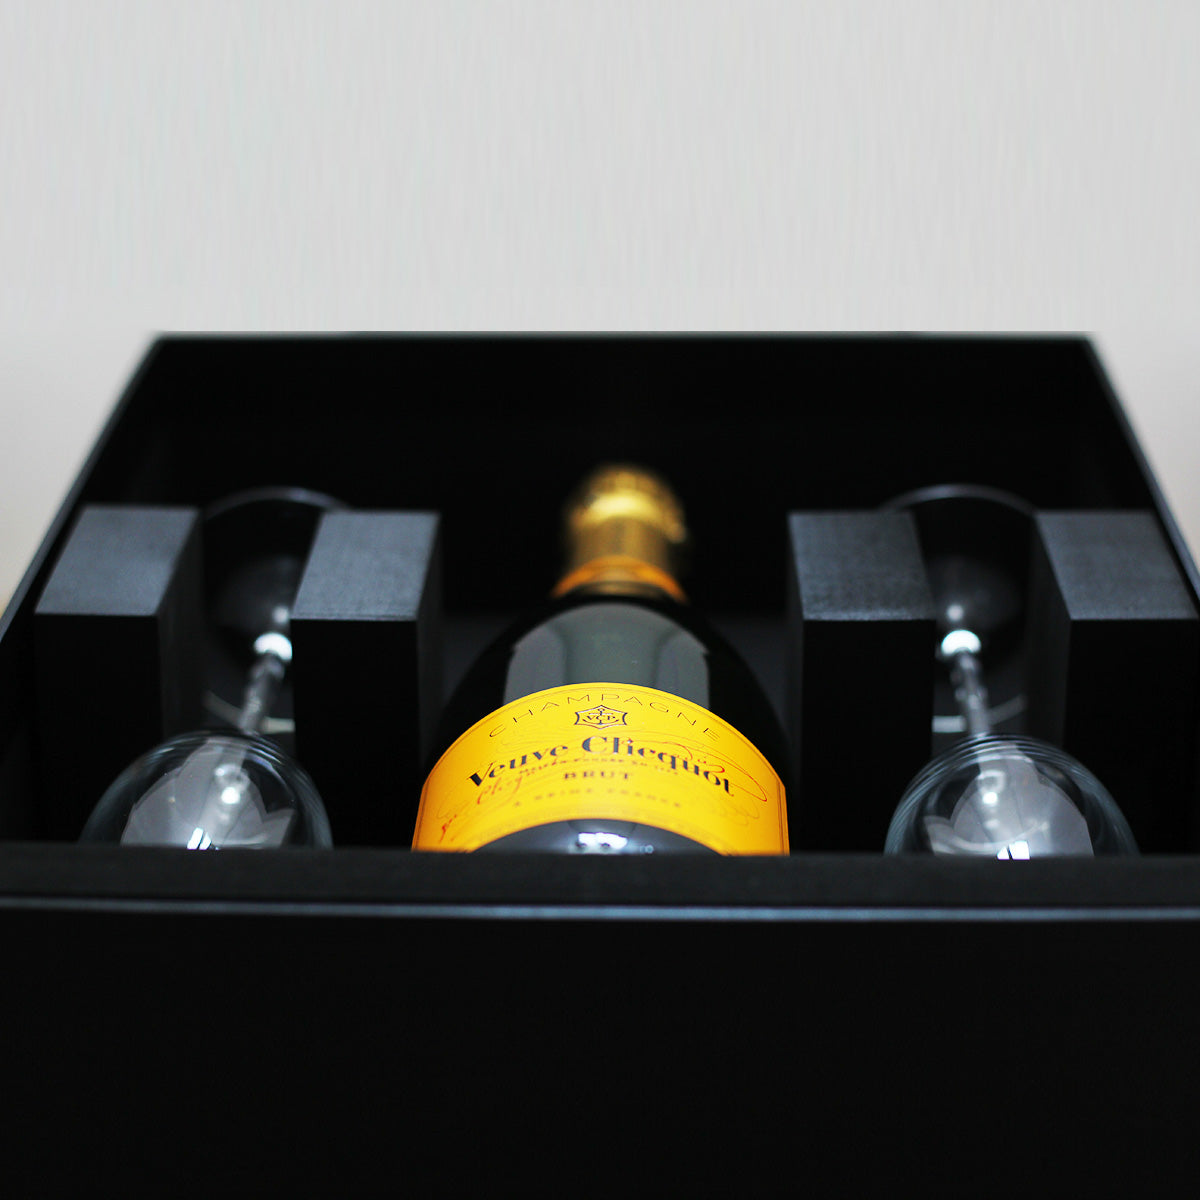 Veuve Clicquot Champagne Gift Set